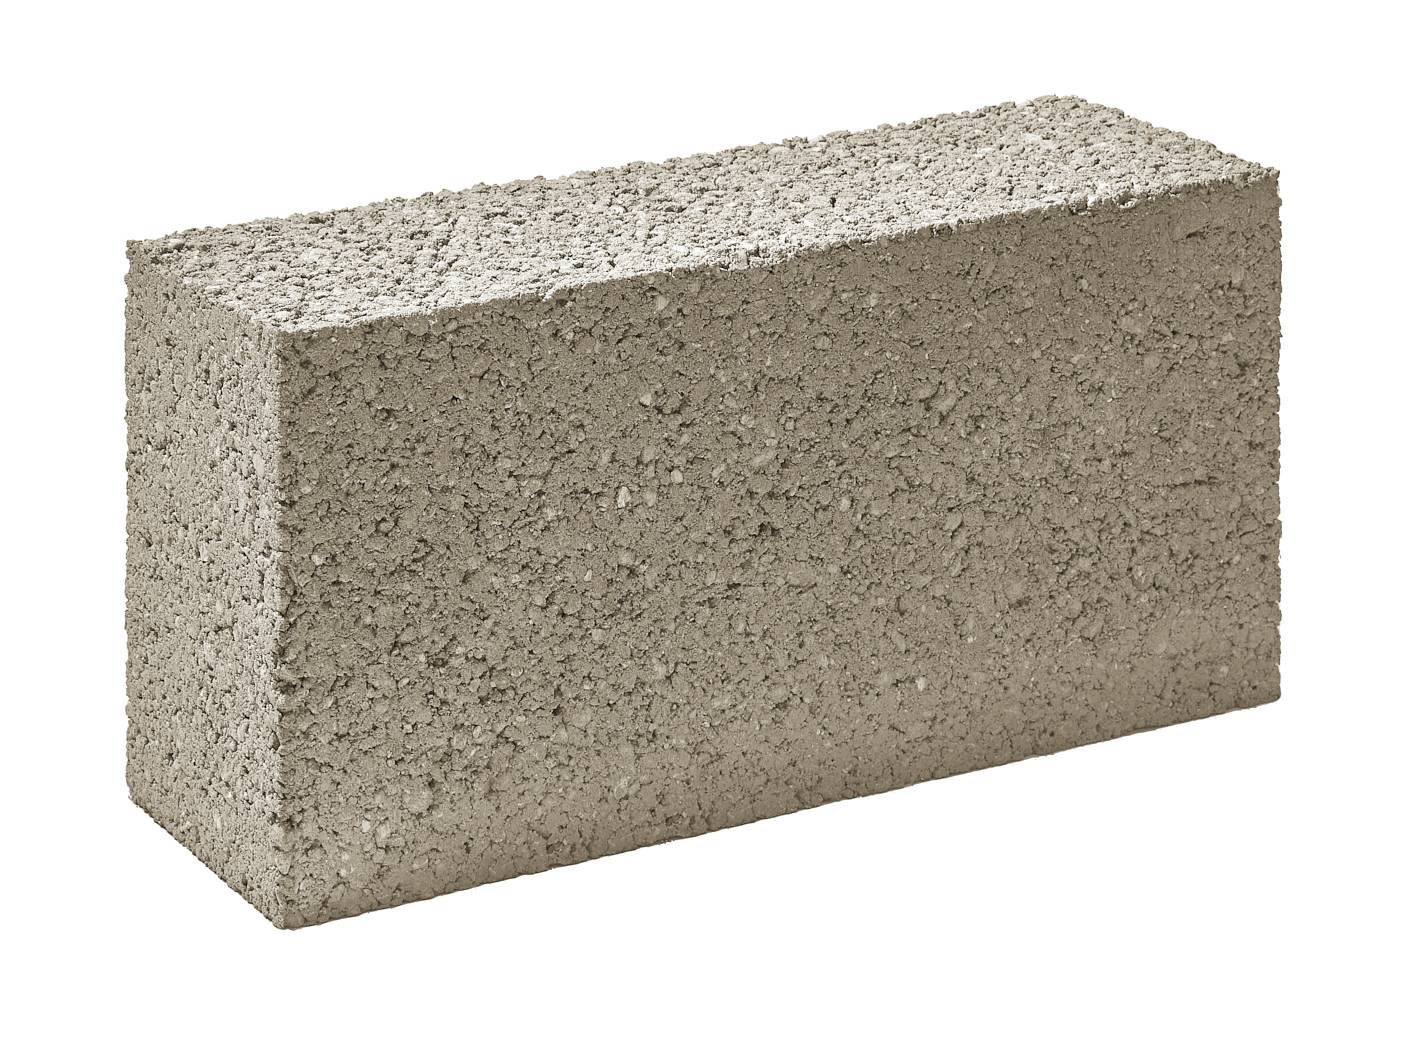 Lignacrete 140 mm Solid 30 N Concrete Blocks - High Density Robust Loadbearing Units